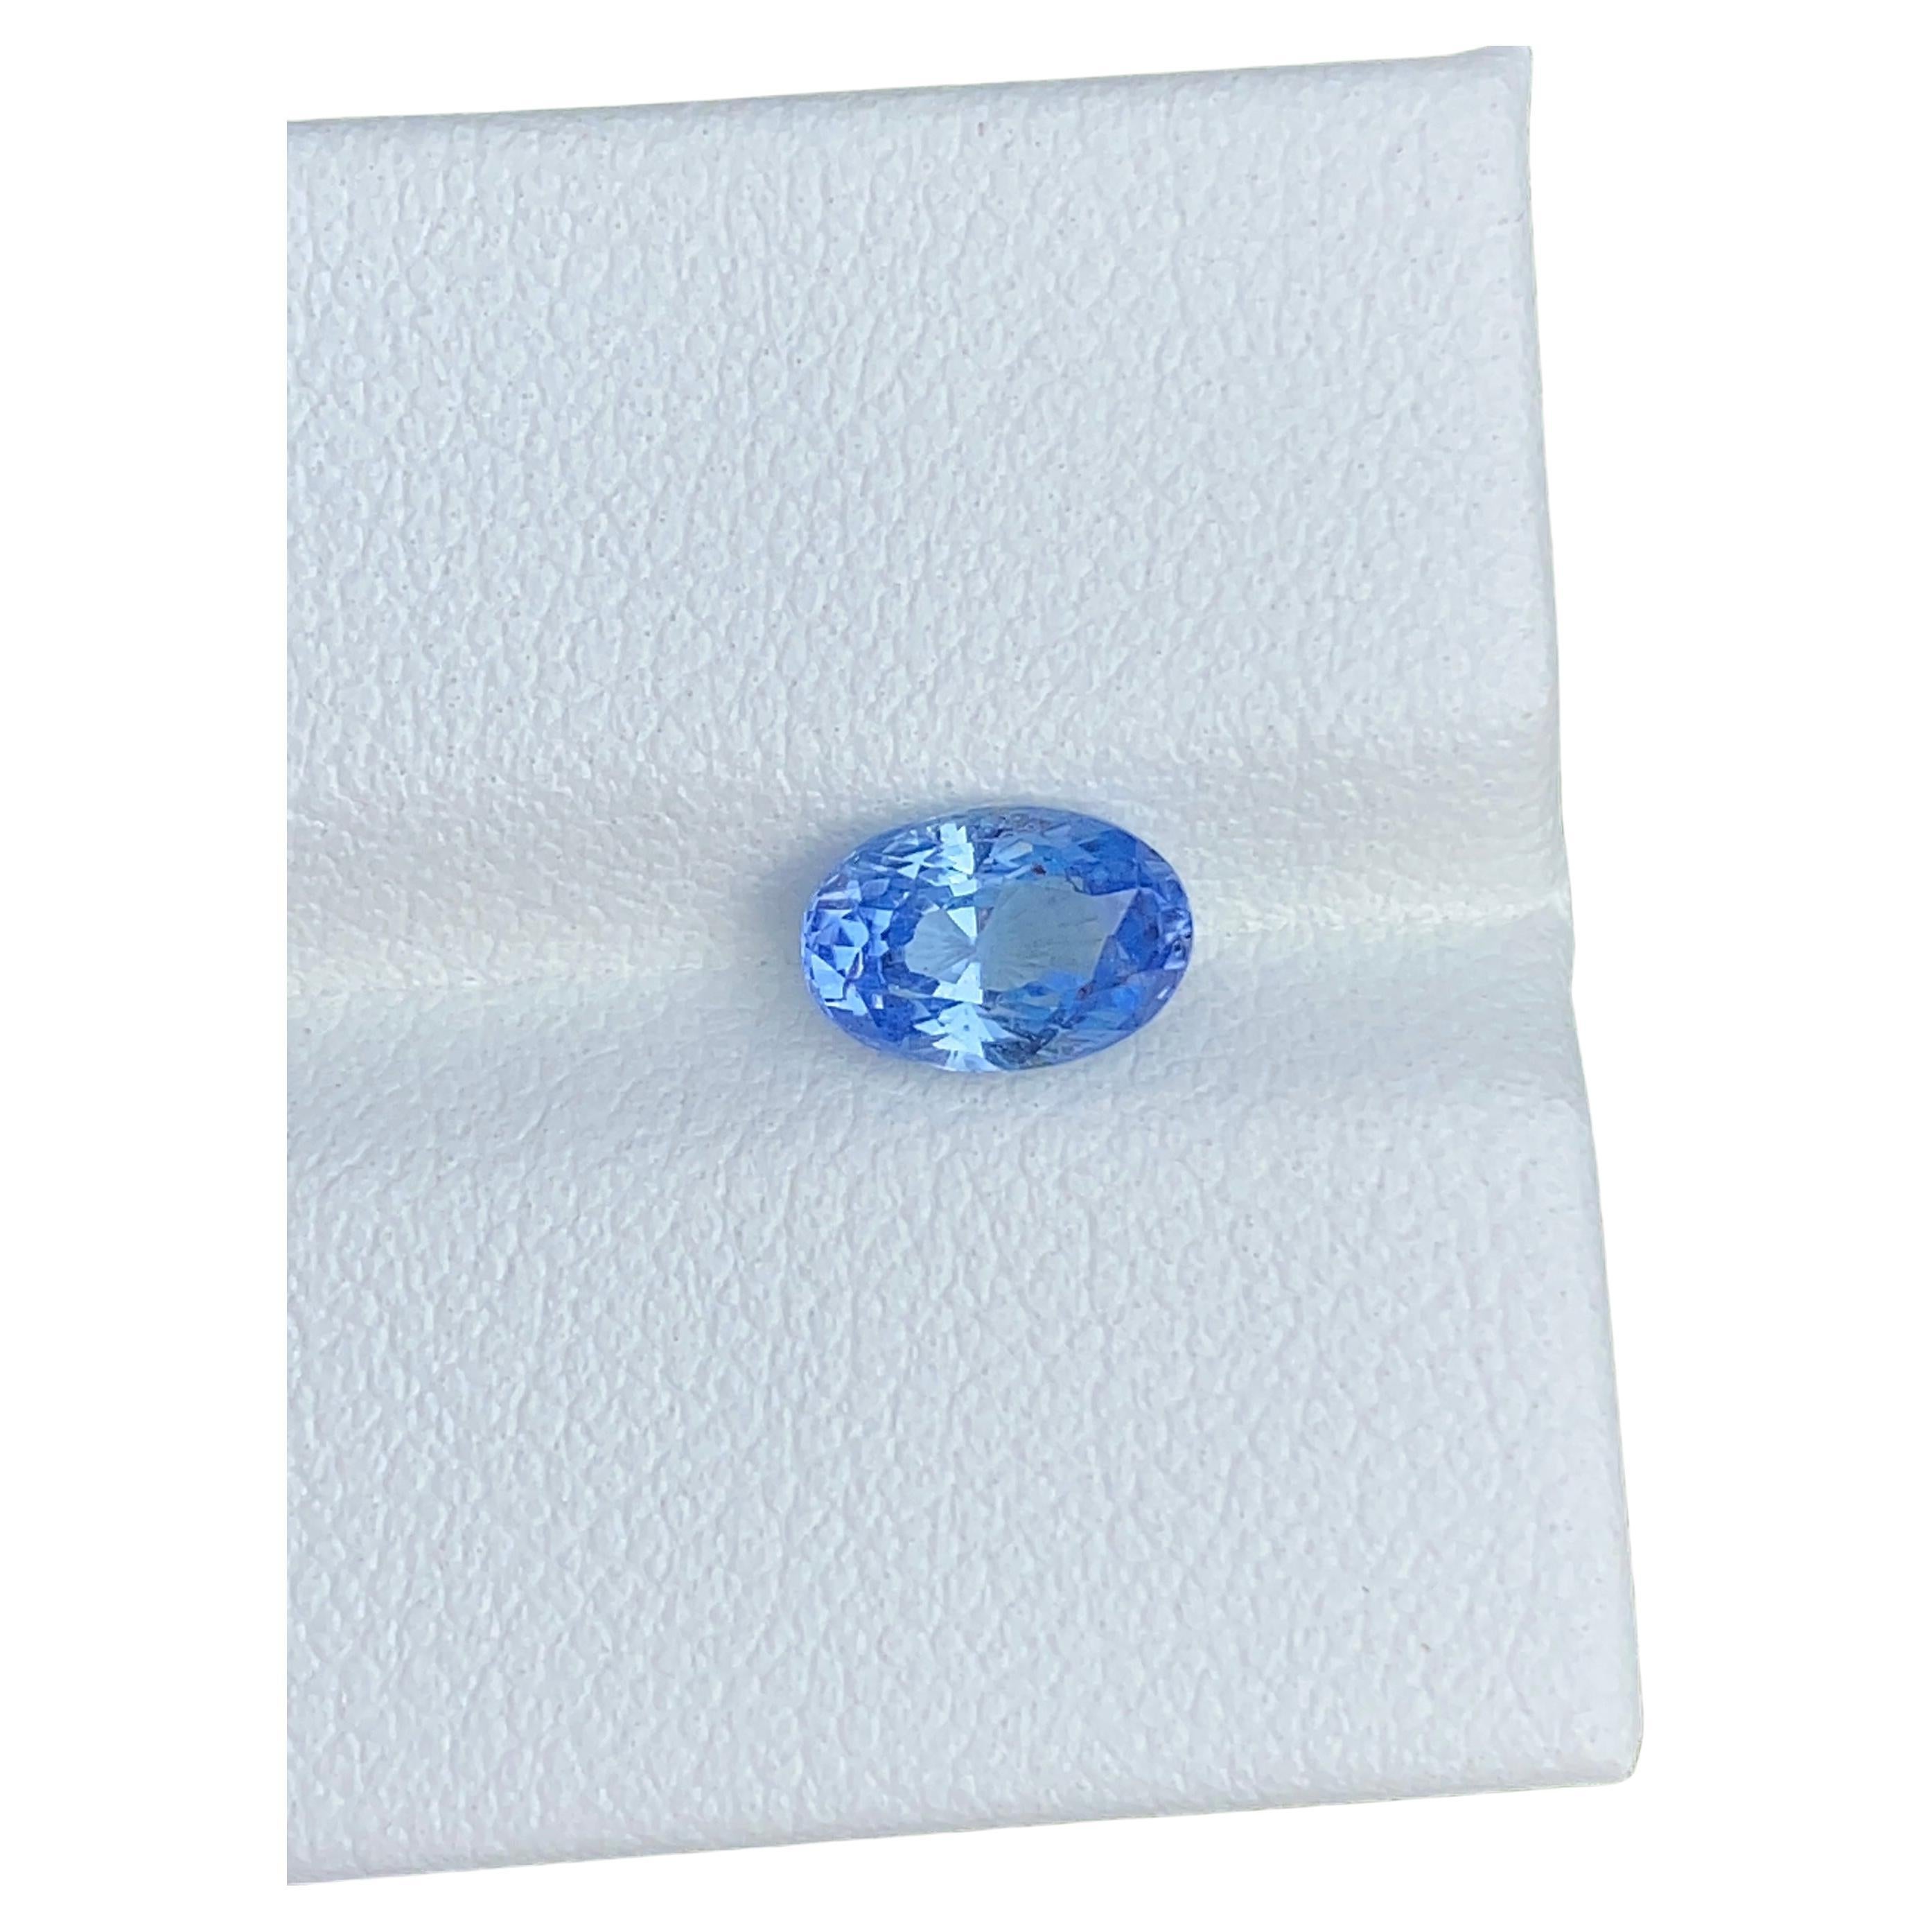 Certified Unheated Blue Sapphire Ring Gem 1.25 Carat Oval Gemstone Ceylon Origin